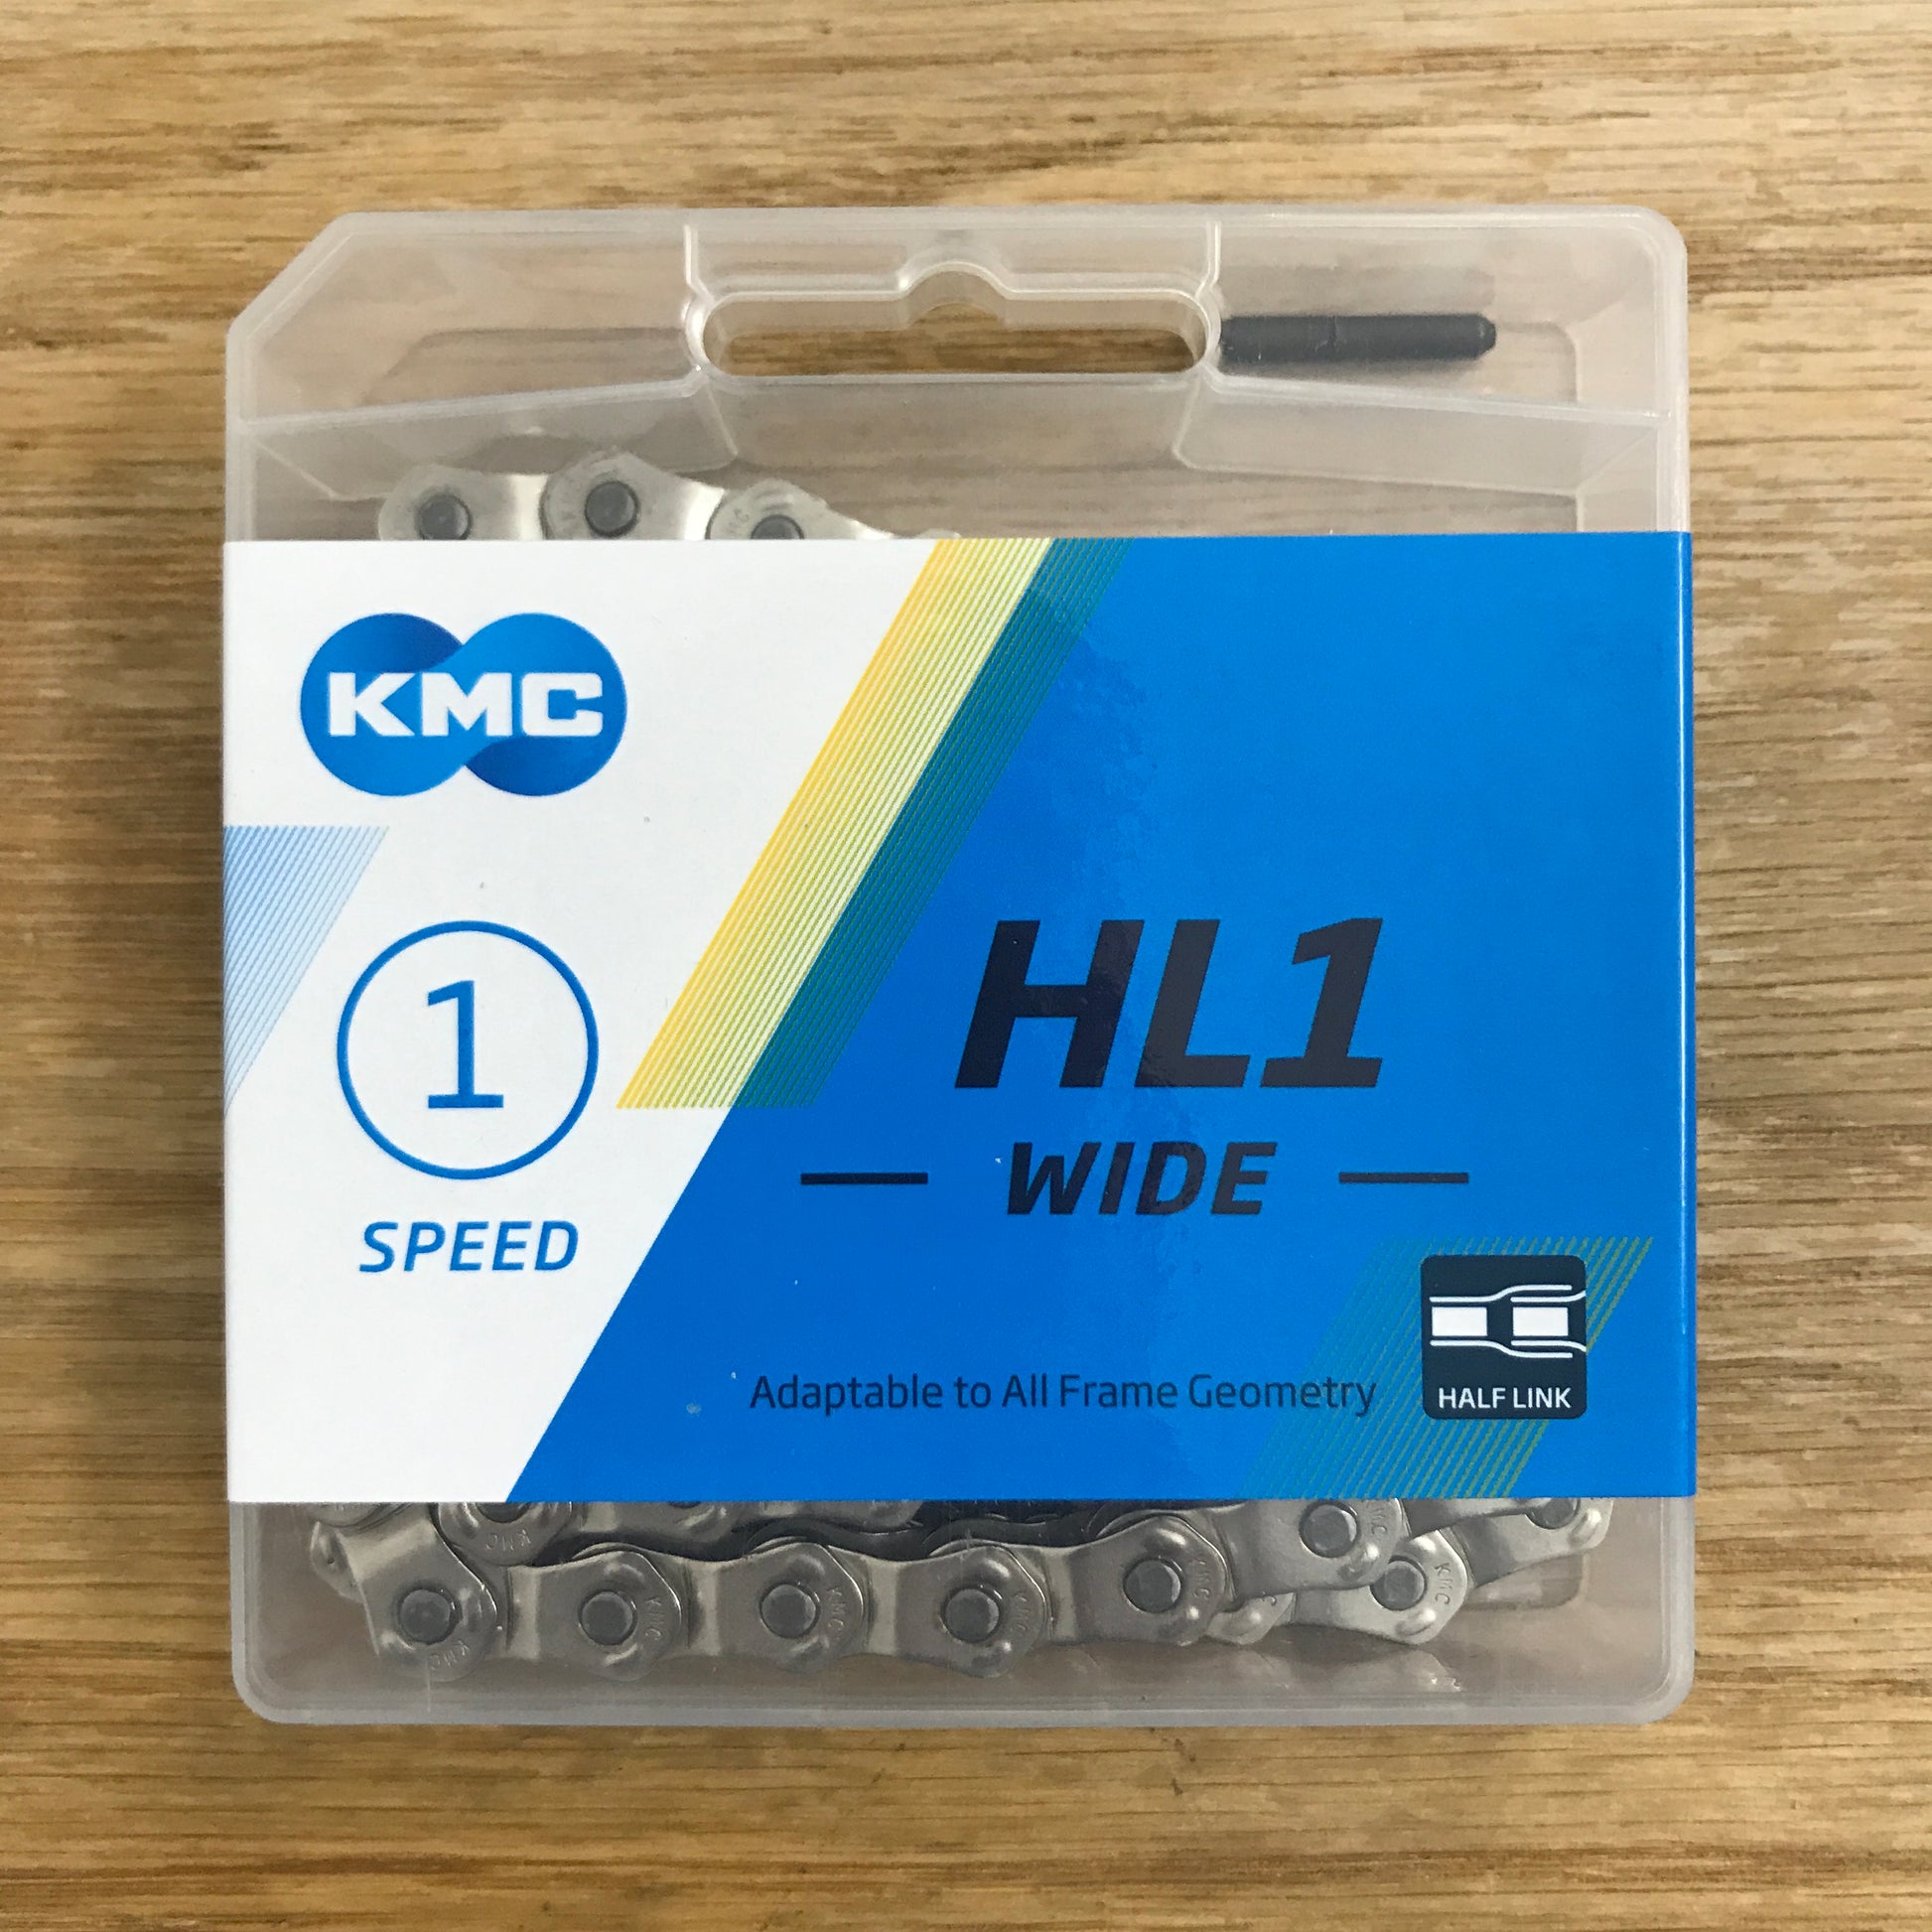 KMC - HL1 Wide Half Link Chain